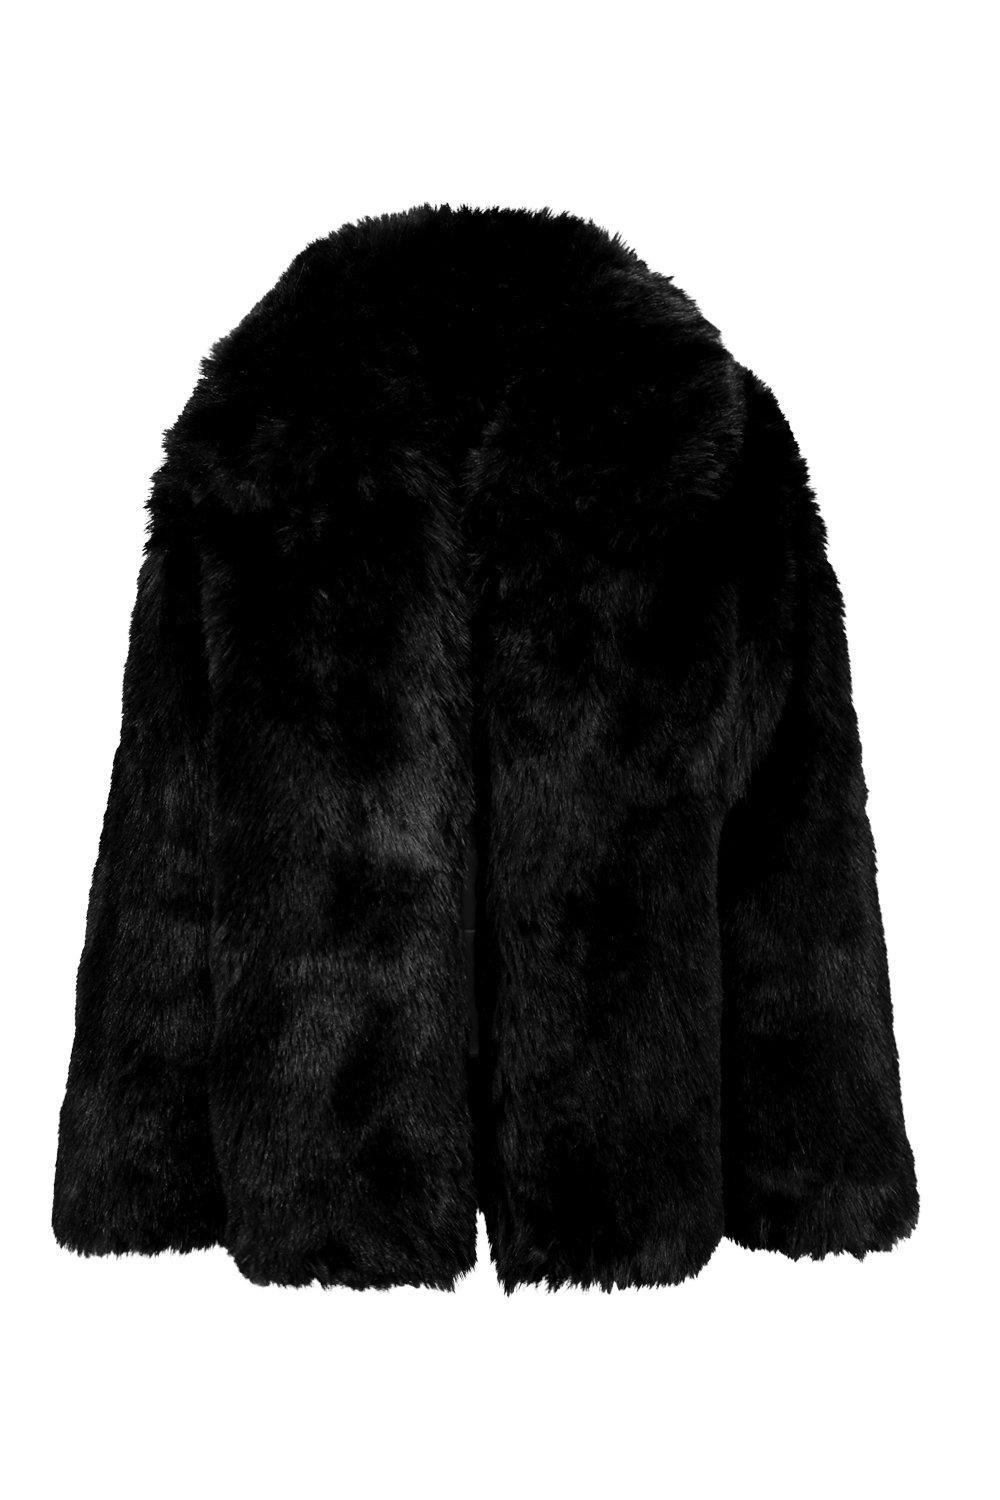 Boohoo Collared Faux Fur Coat